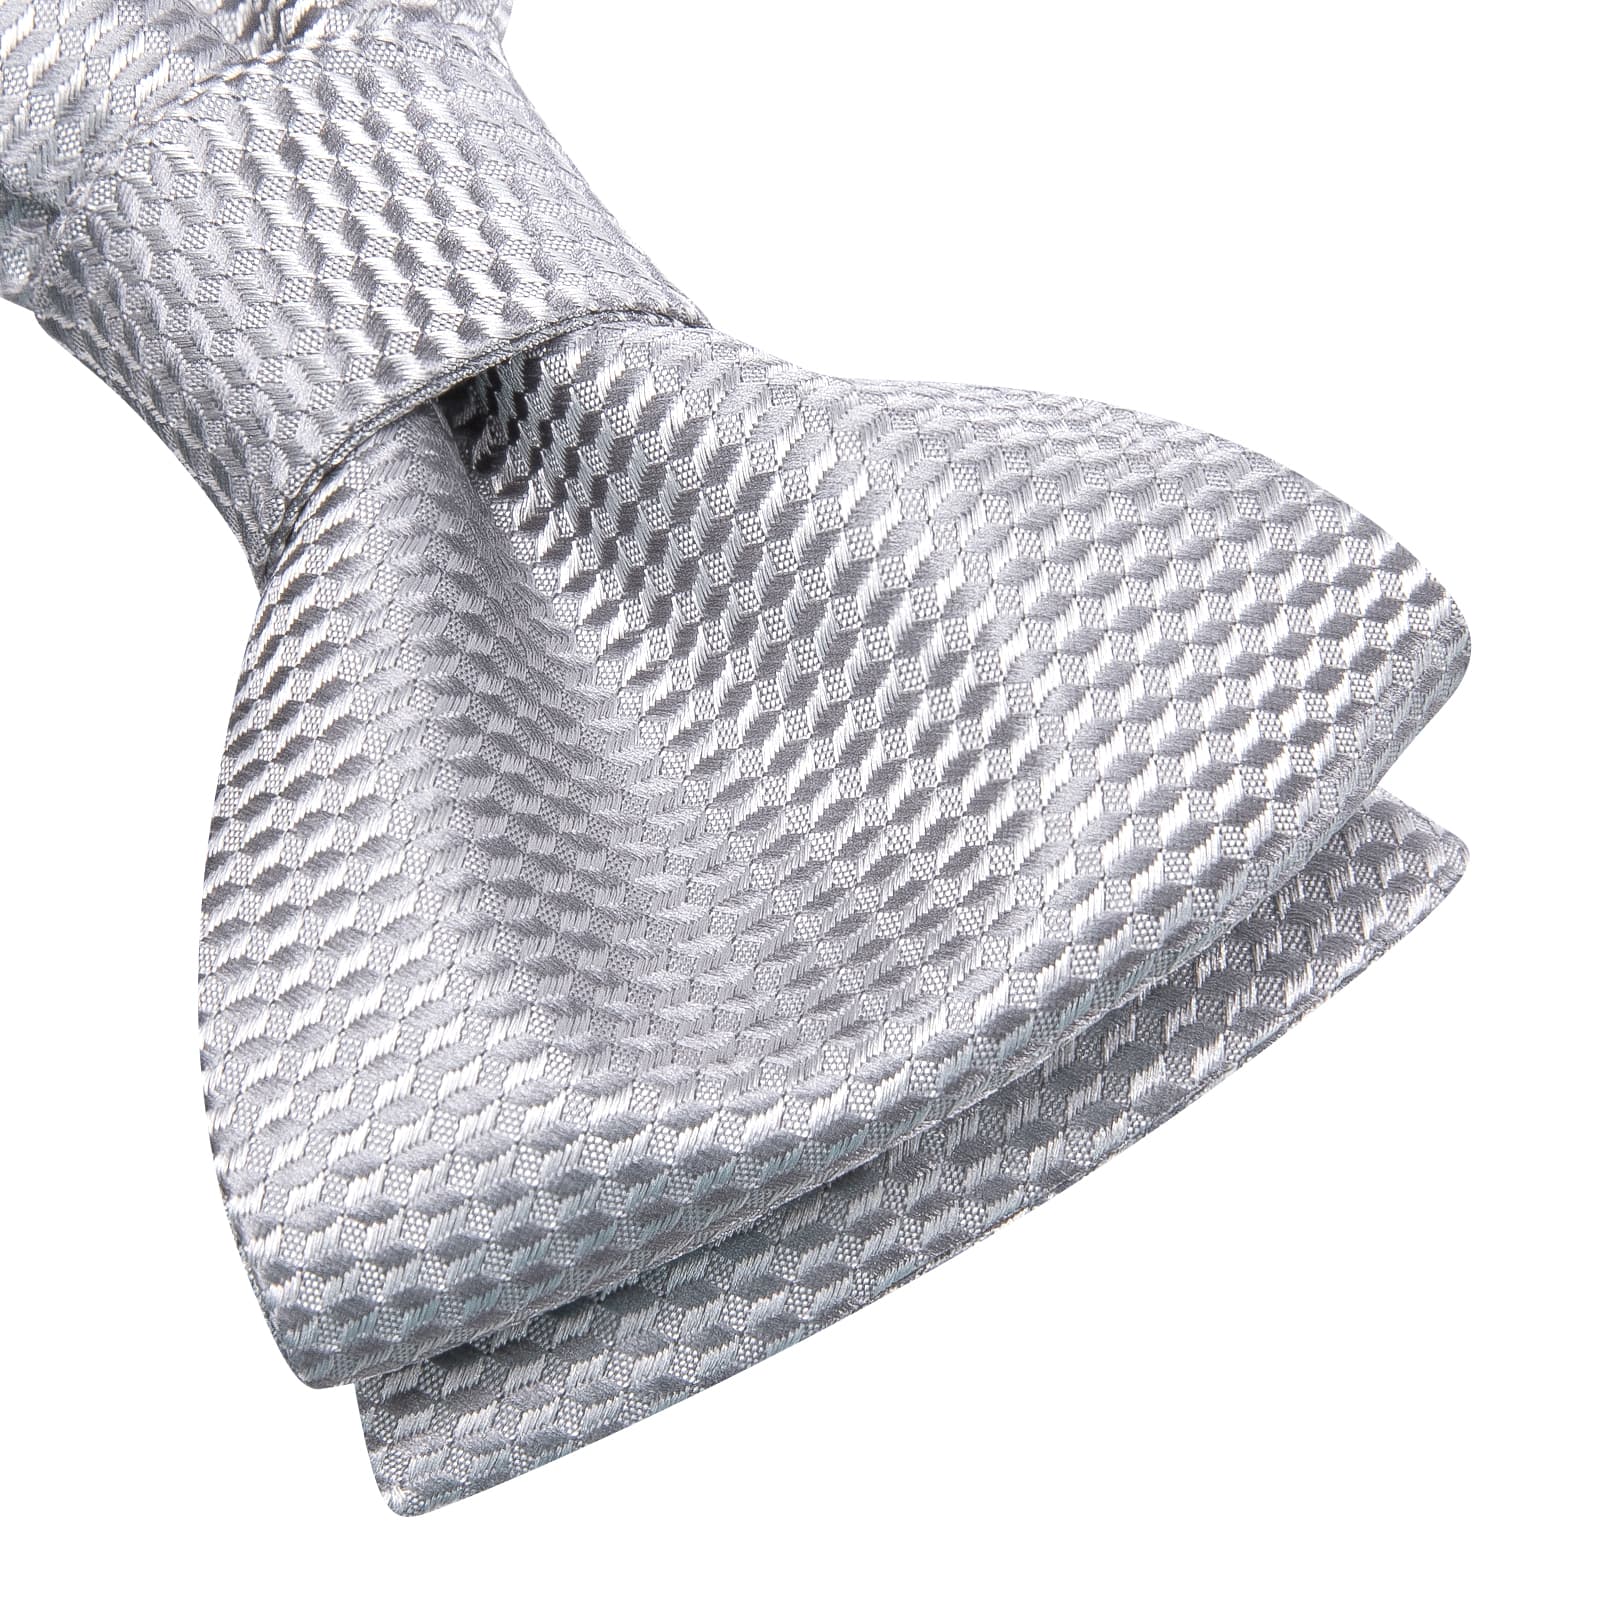 Hi-Tie Silver Grey Self-Tied Bowtie Geometric Tie Hanky Cufflinks Set